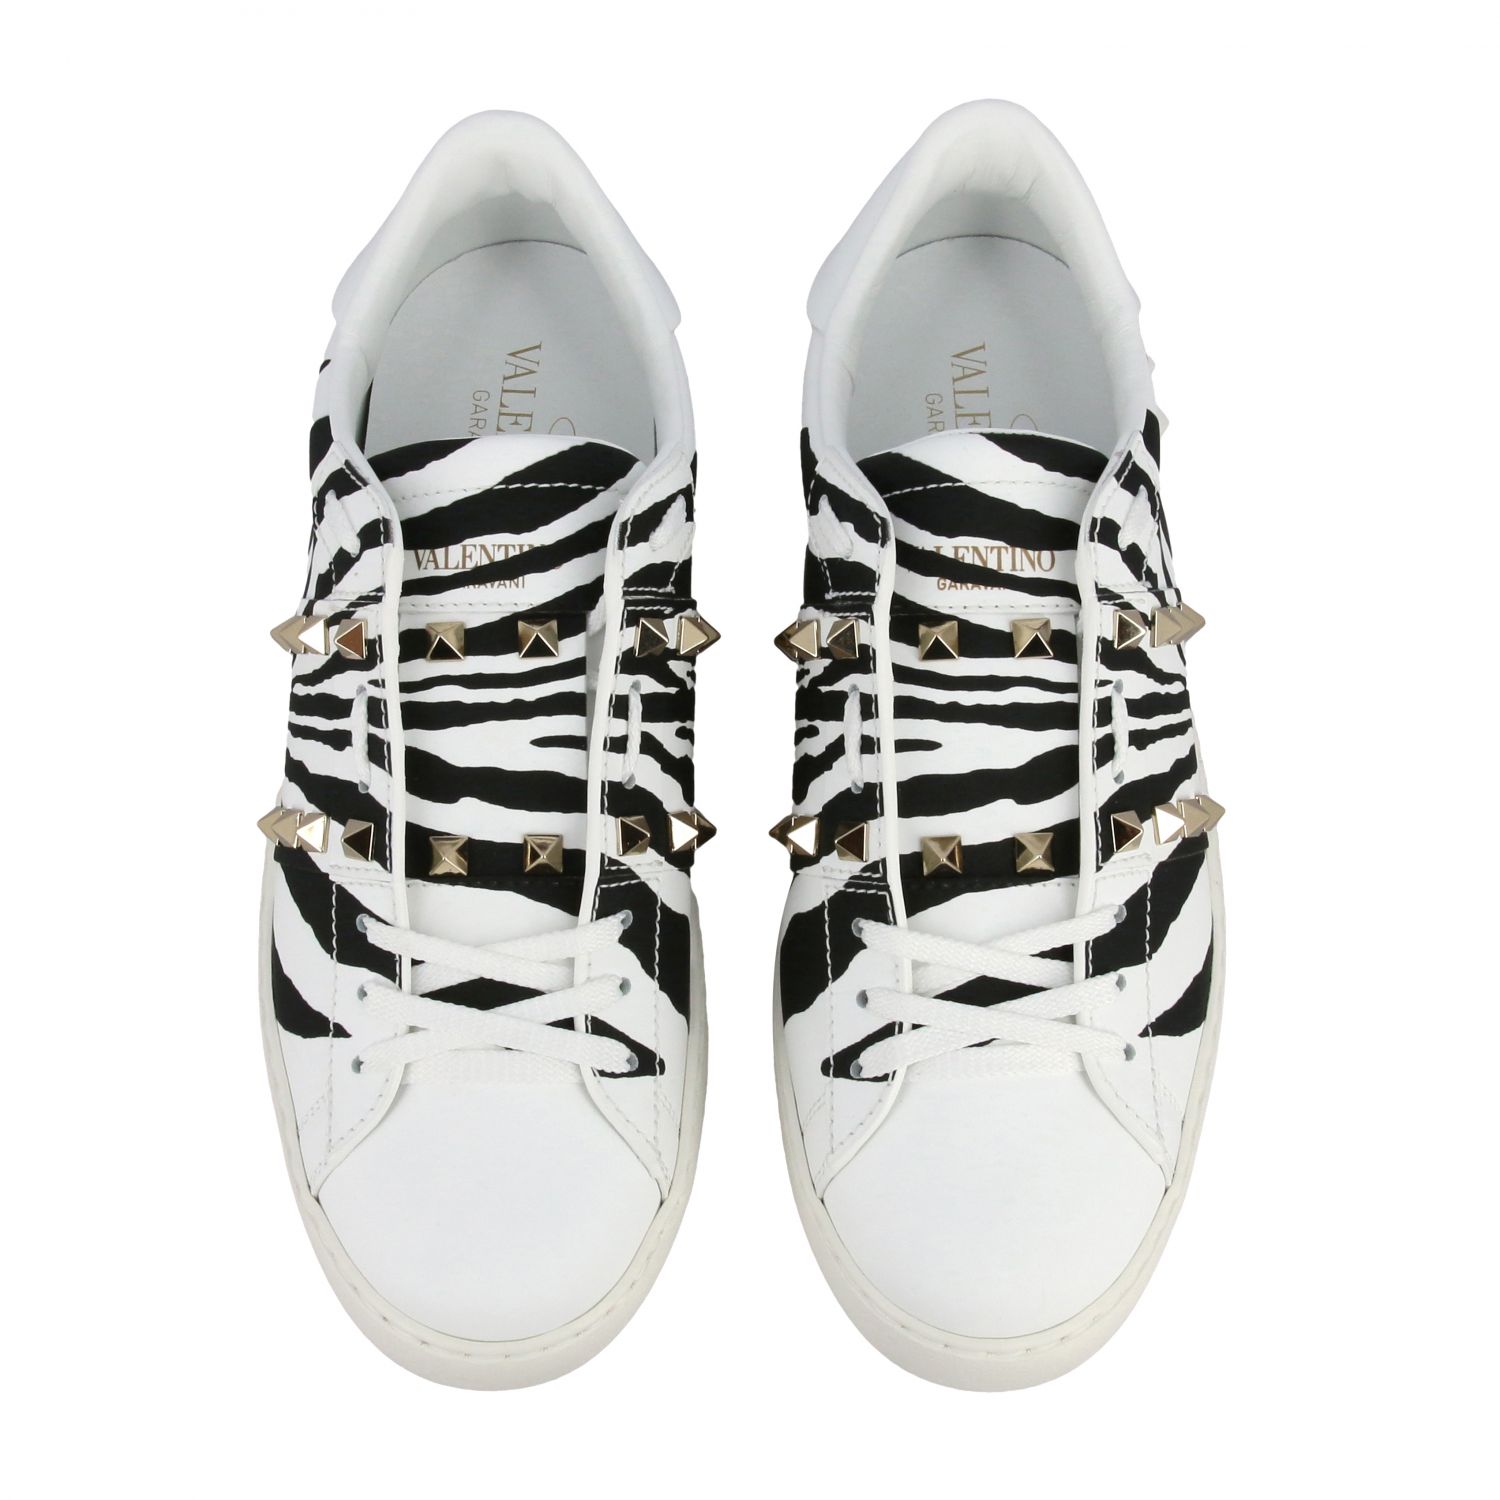 sneakers zebra print